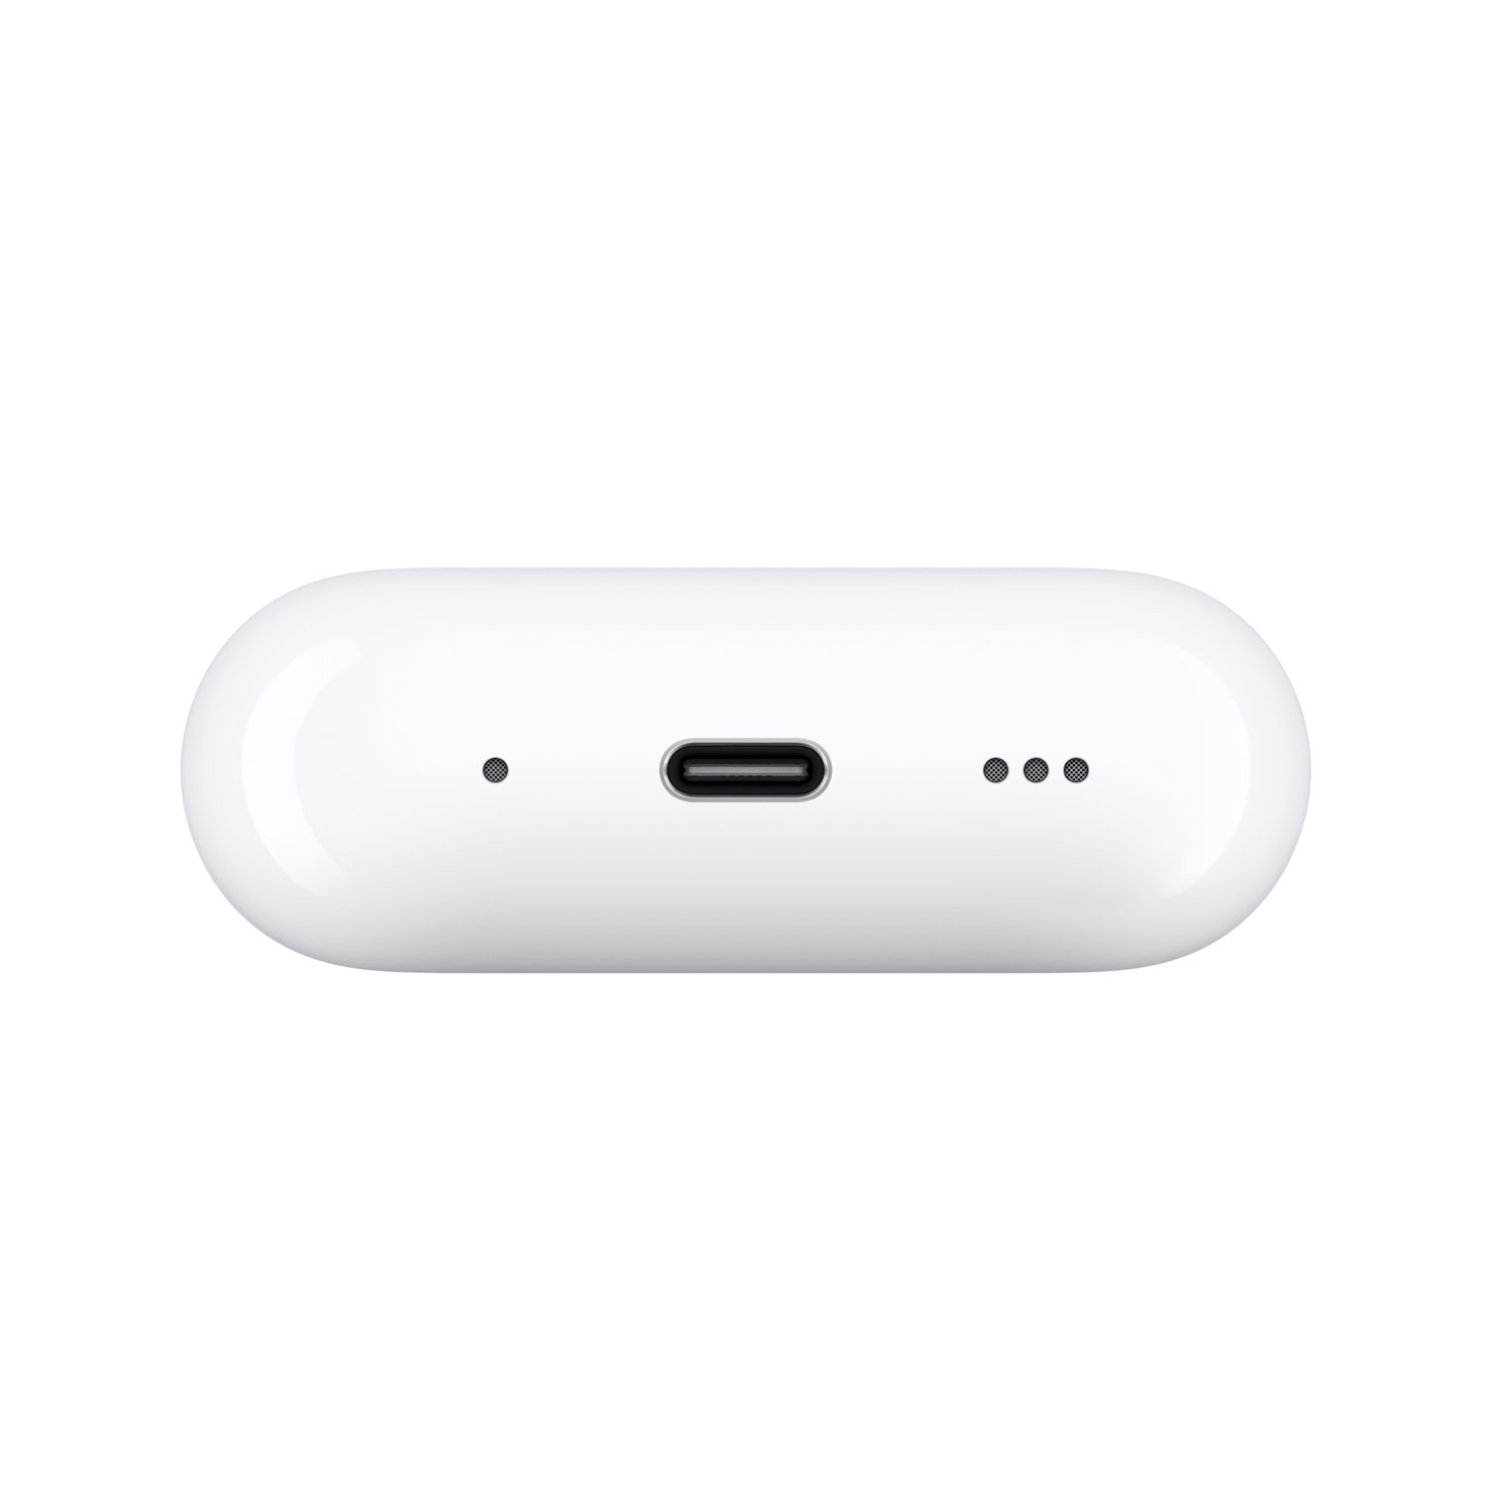 هندزفری بلوتوث اپل مدل ایرپاد پرو نسل دوم با قابلیت شارژ USB-C